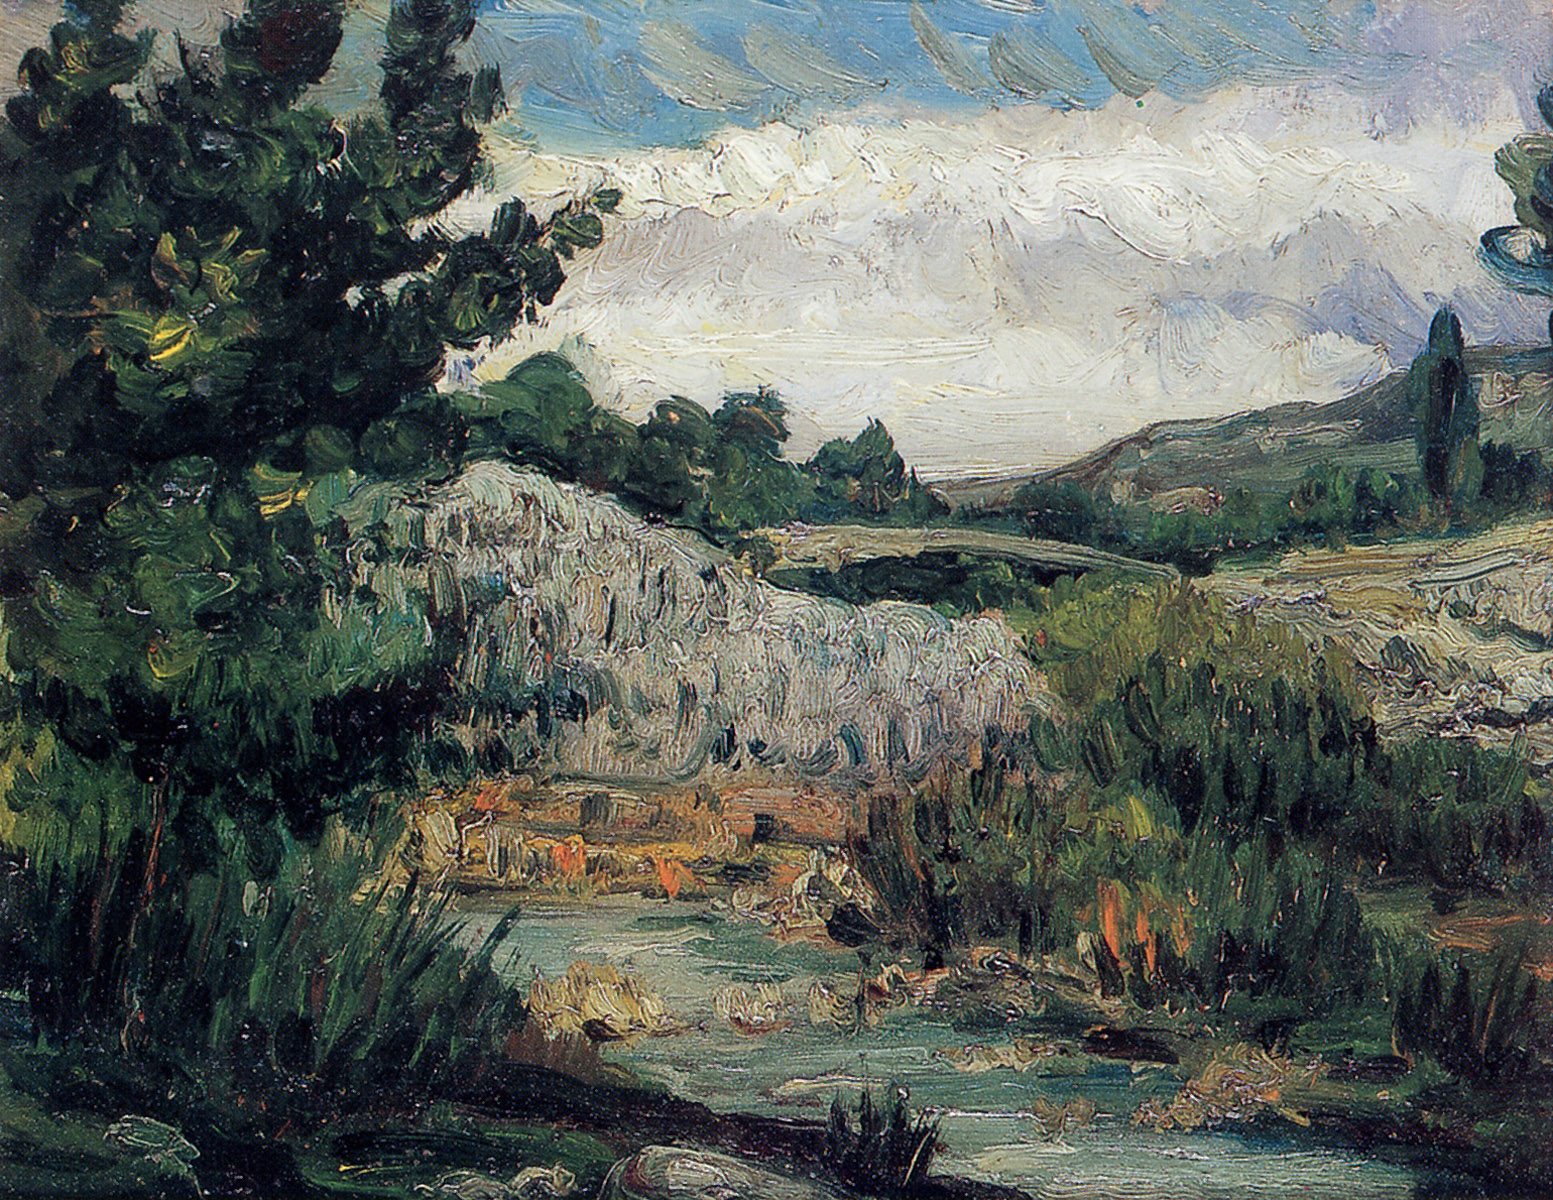 Paul+Cezanne-1839-1906 (162).jpg